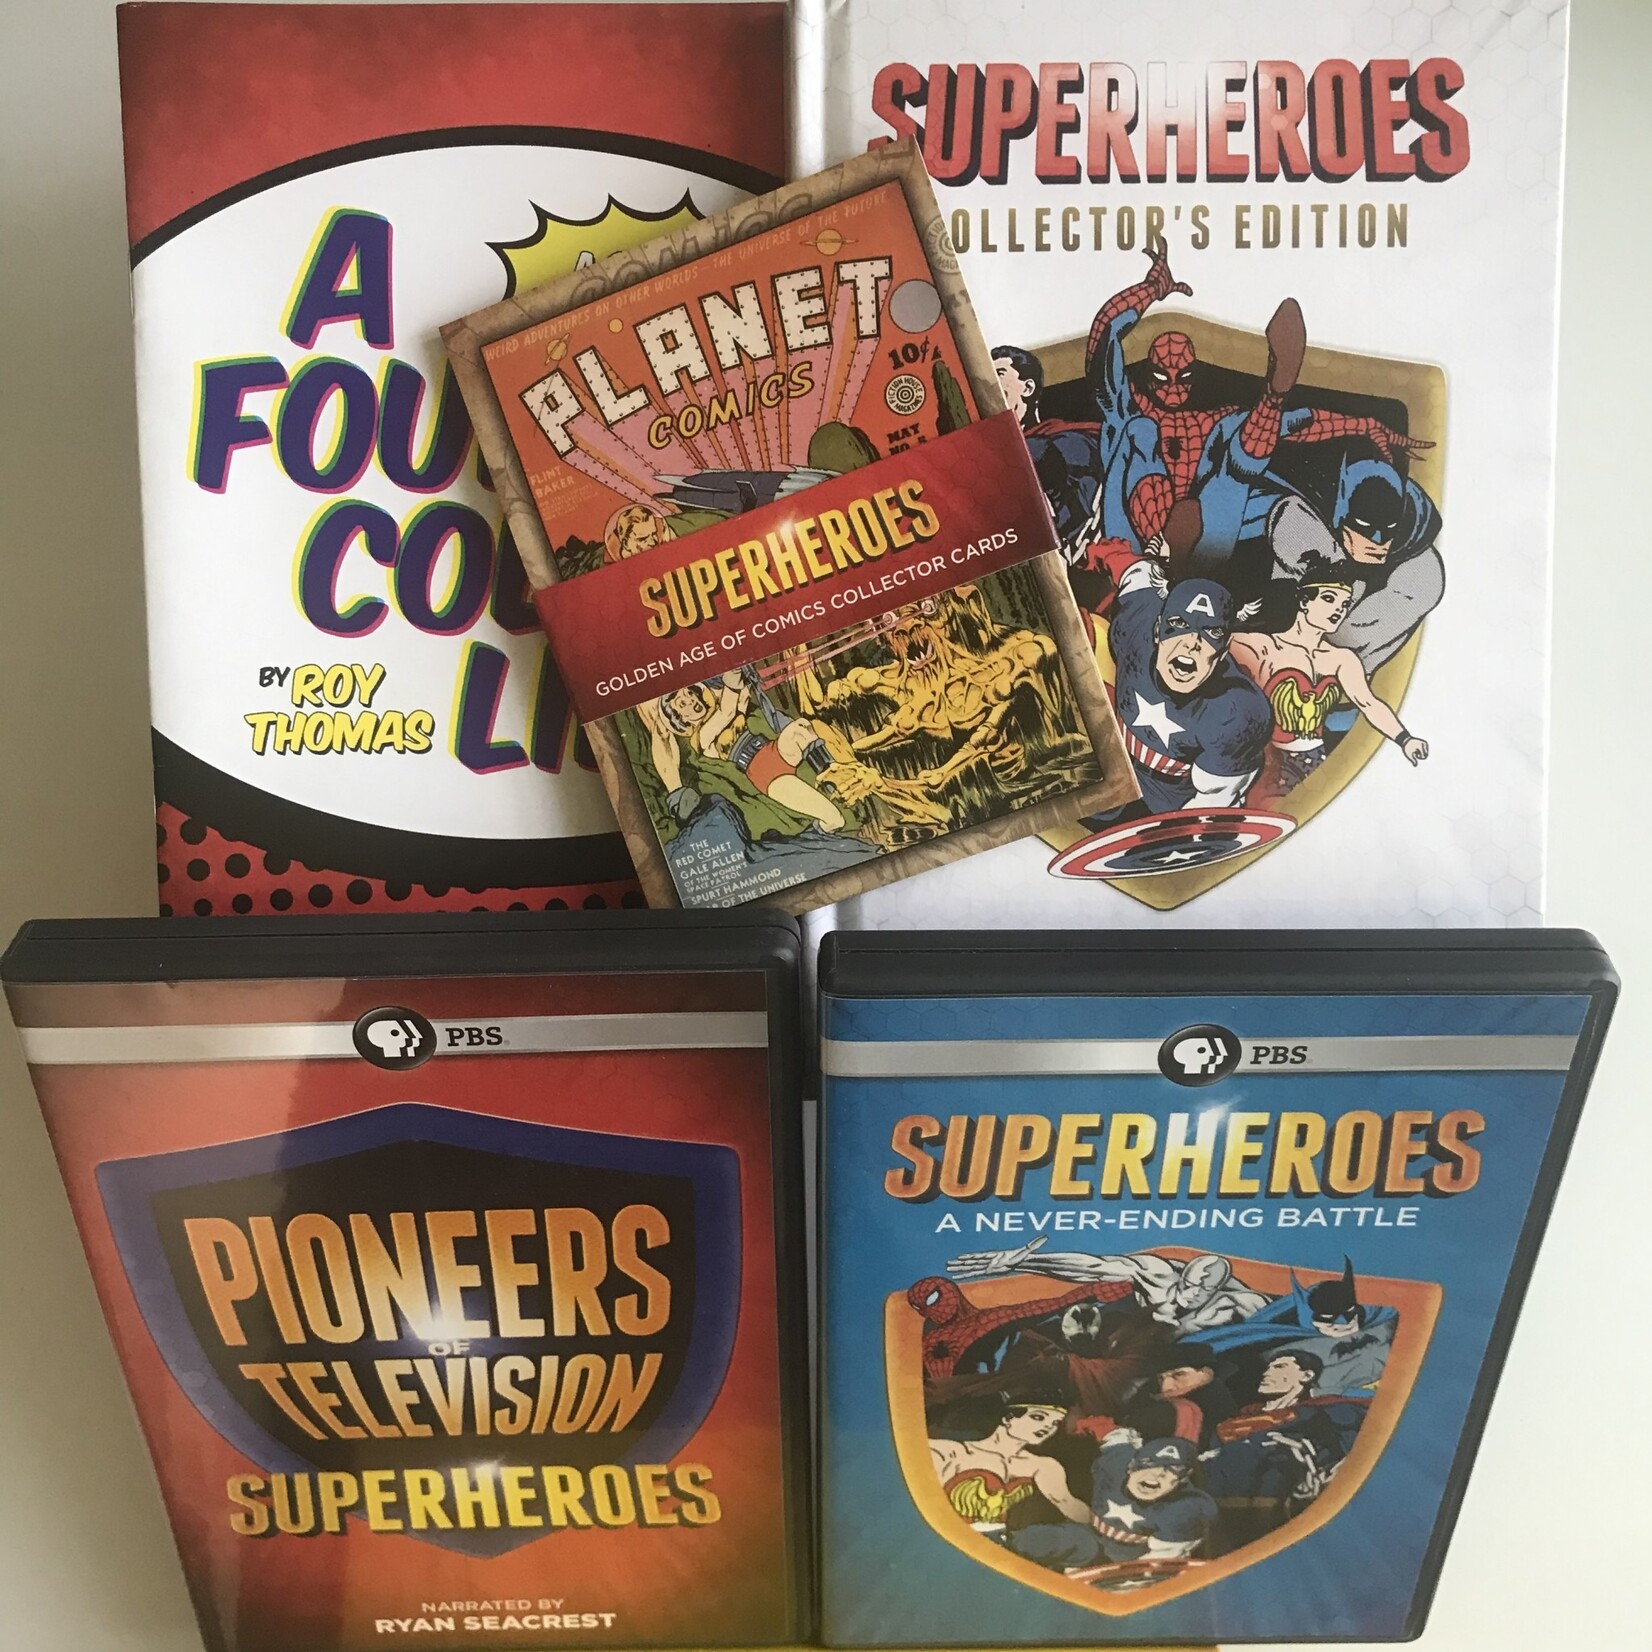 Superheroes: The Epic History - DVD Boxset (USED)